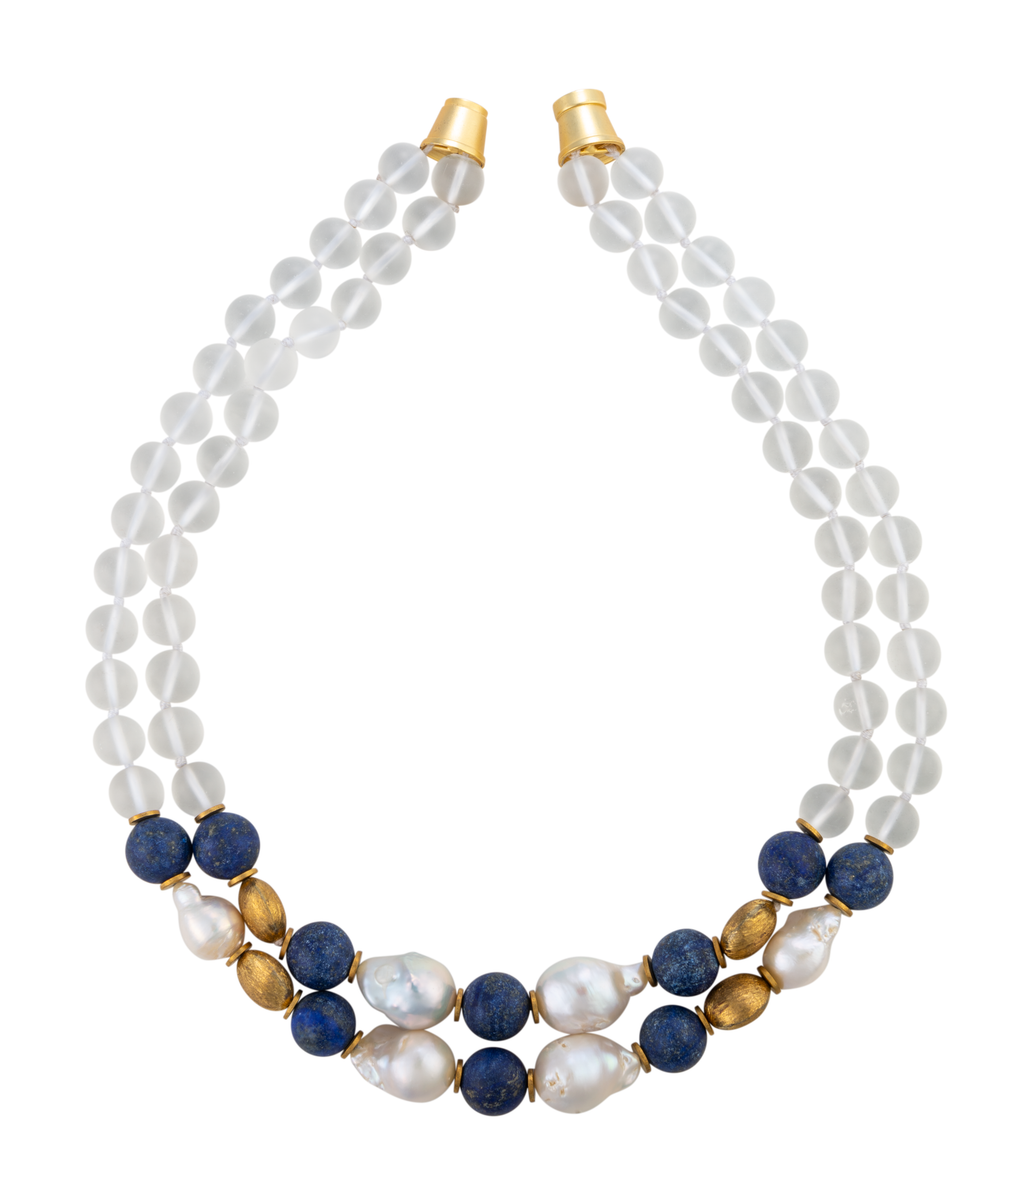 Blue lapis, brass, and glass biwa pearl necklace